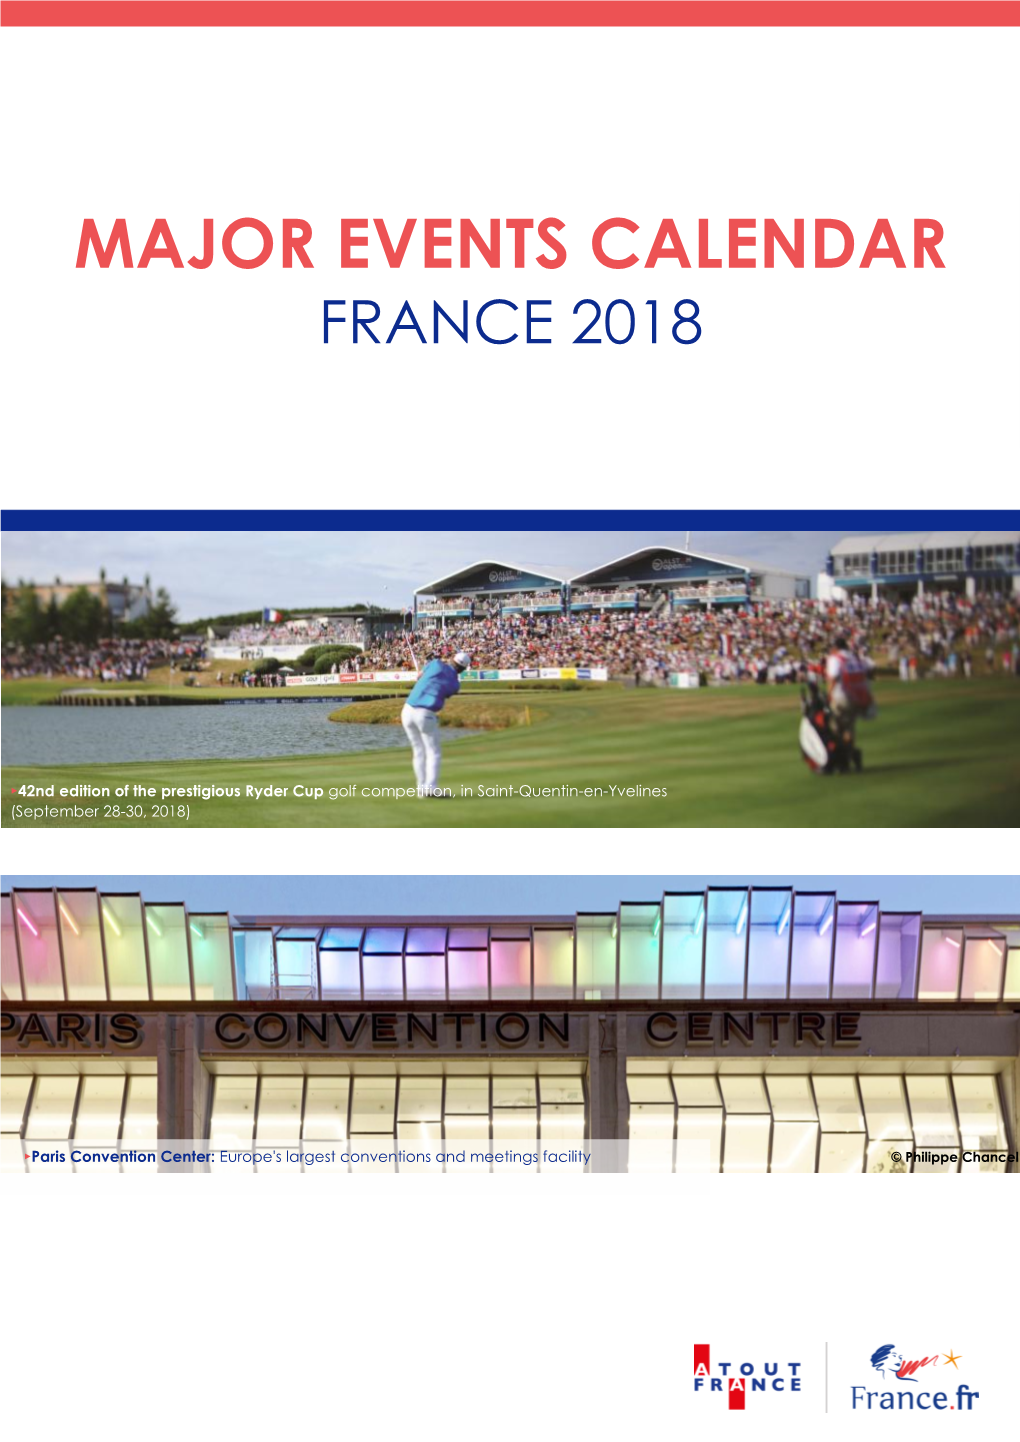 Major Events Calendar